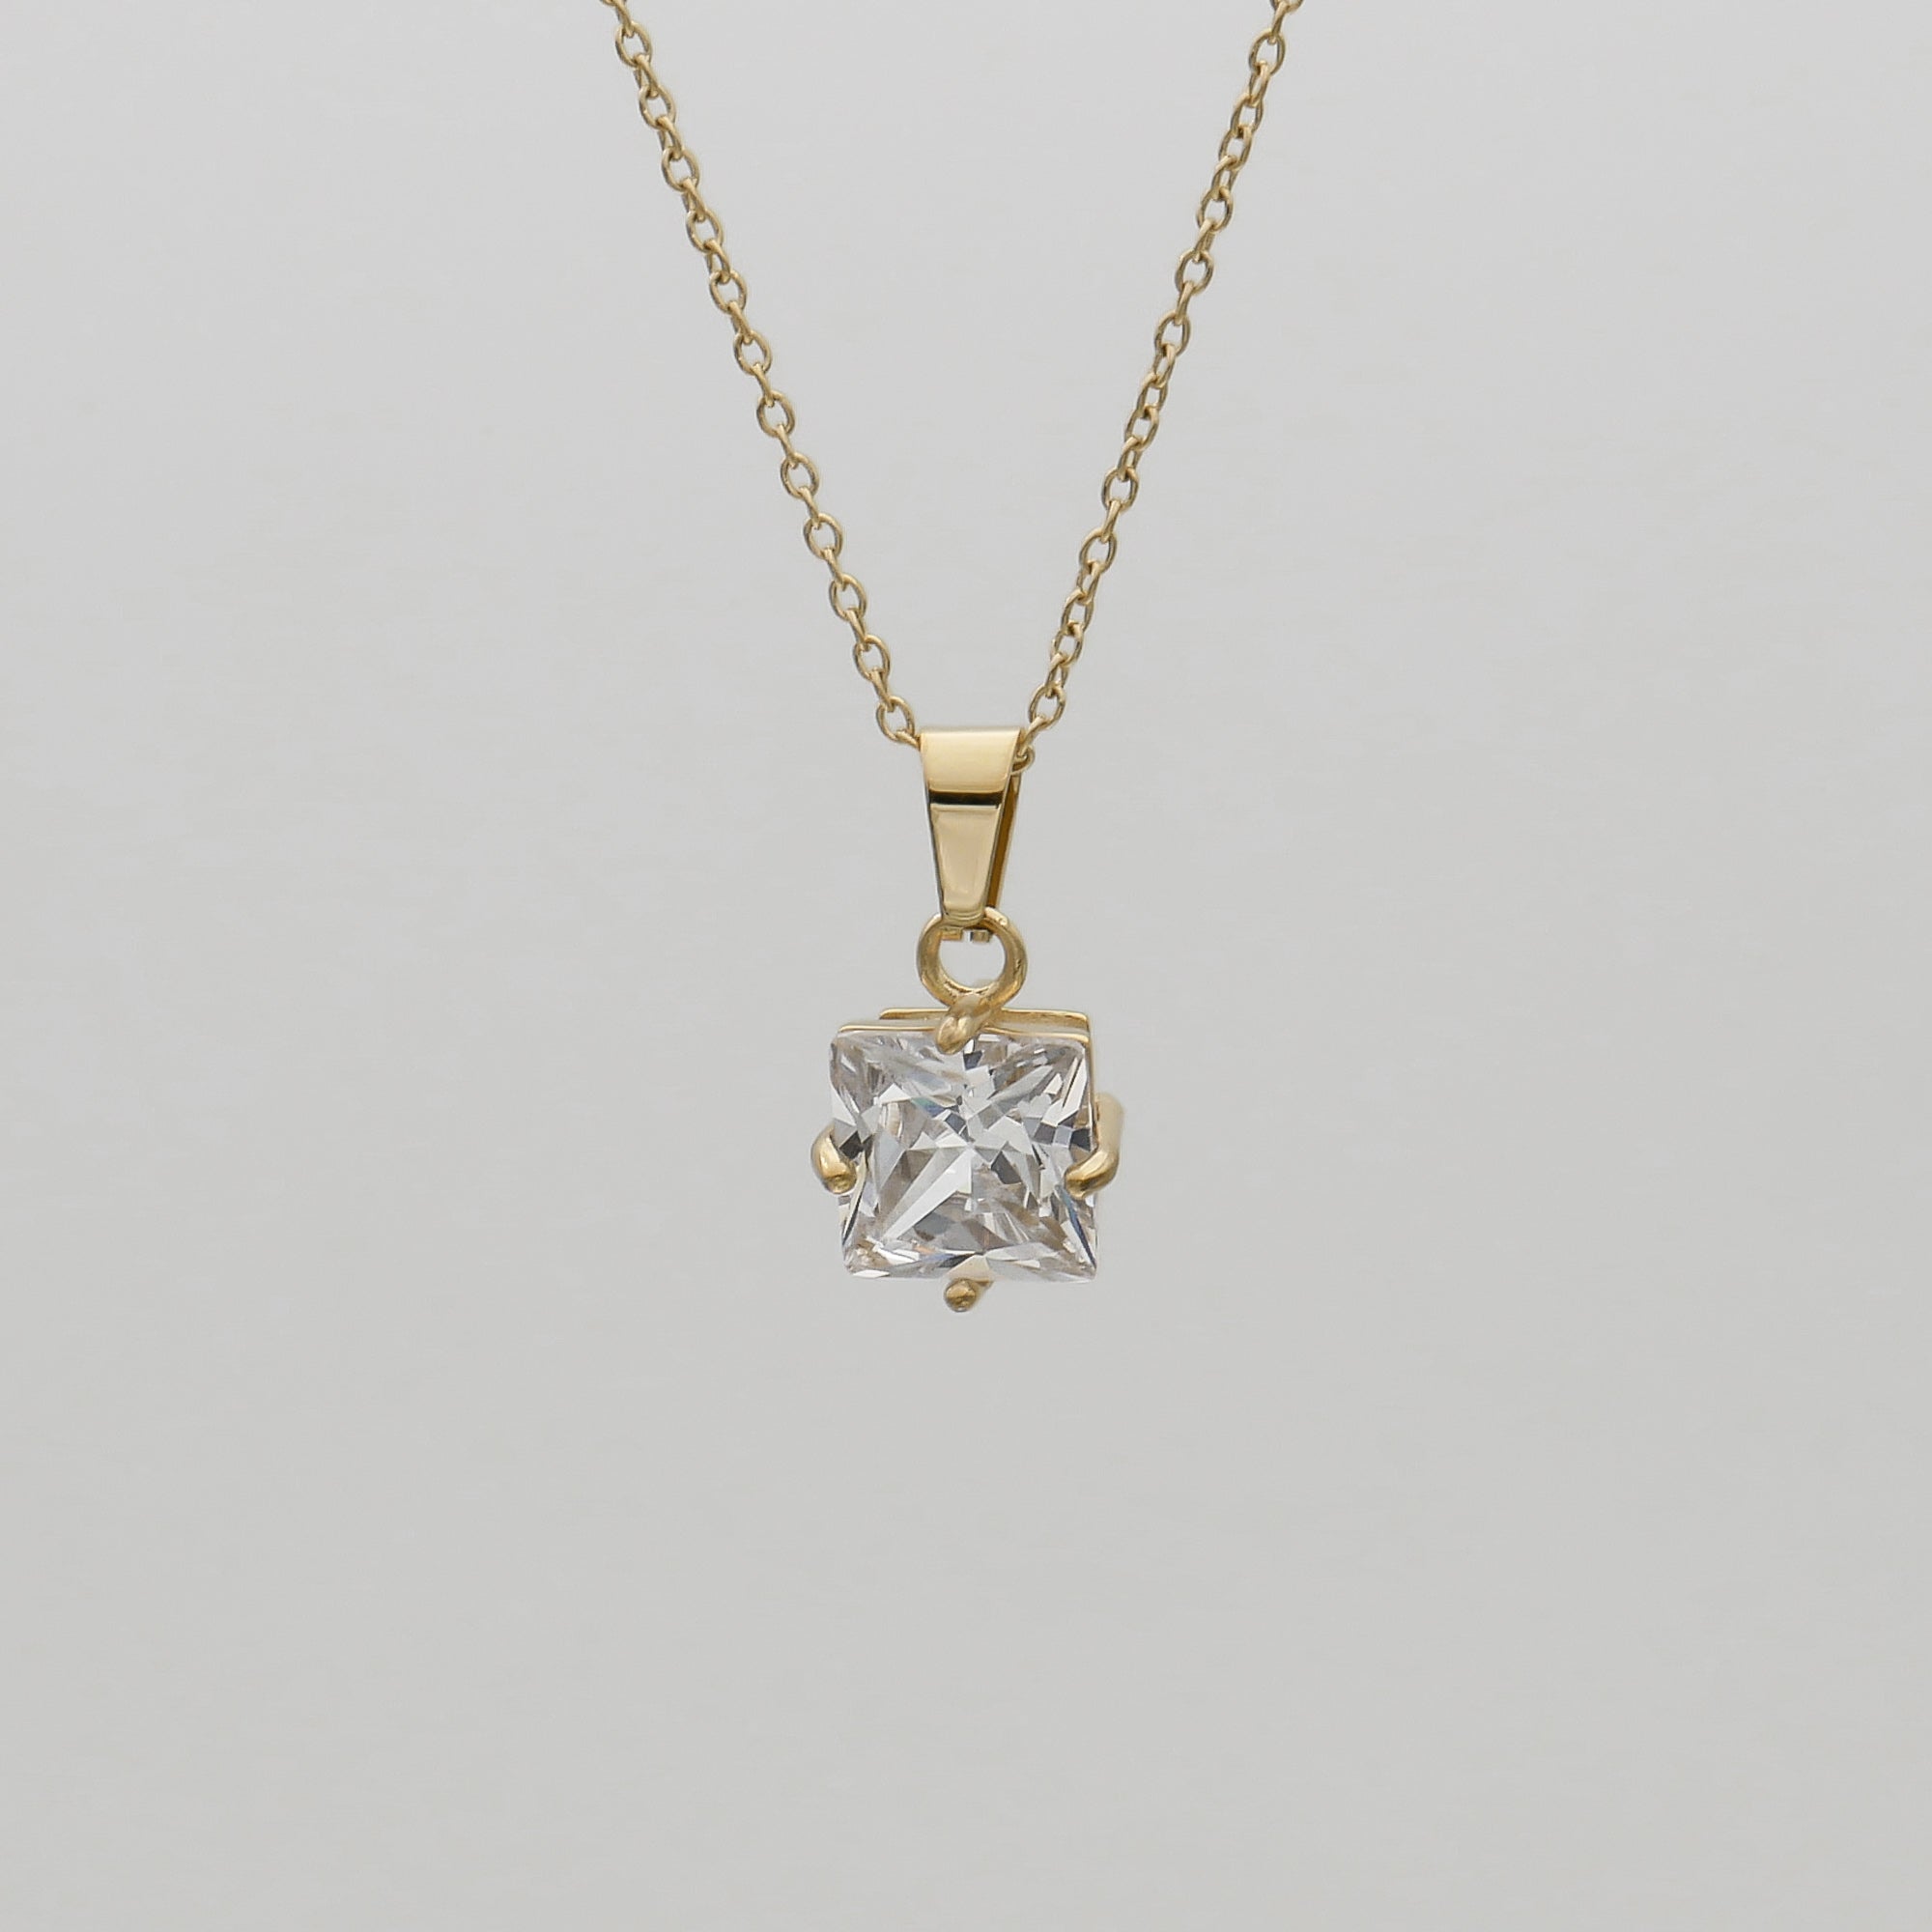 Asha Gemstone Necklace with clear cz gem